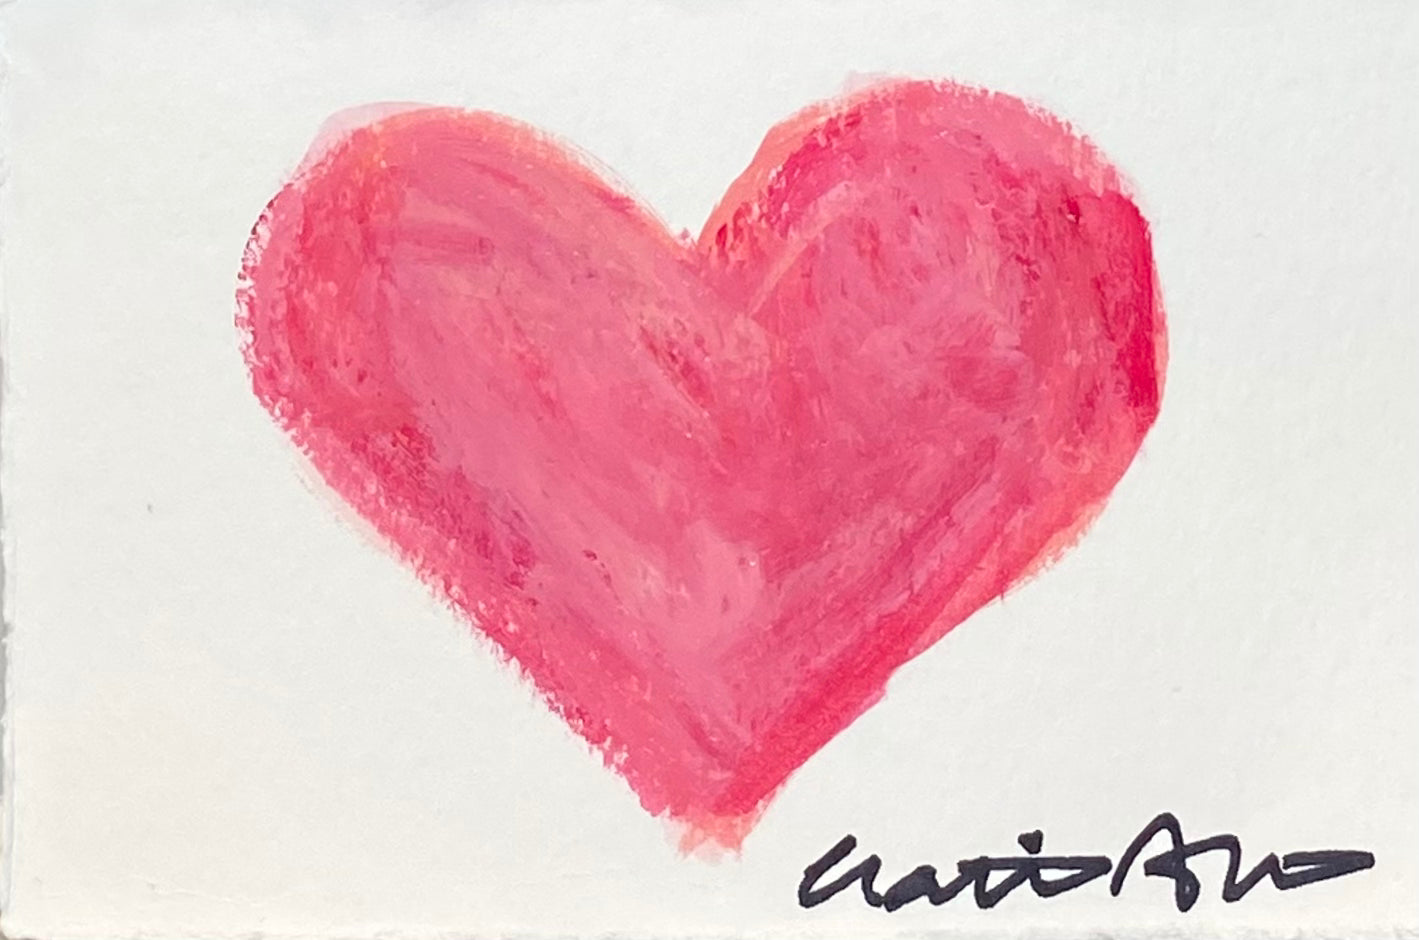 Love story - mini heart on paper (3x4.5)